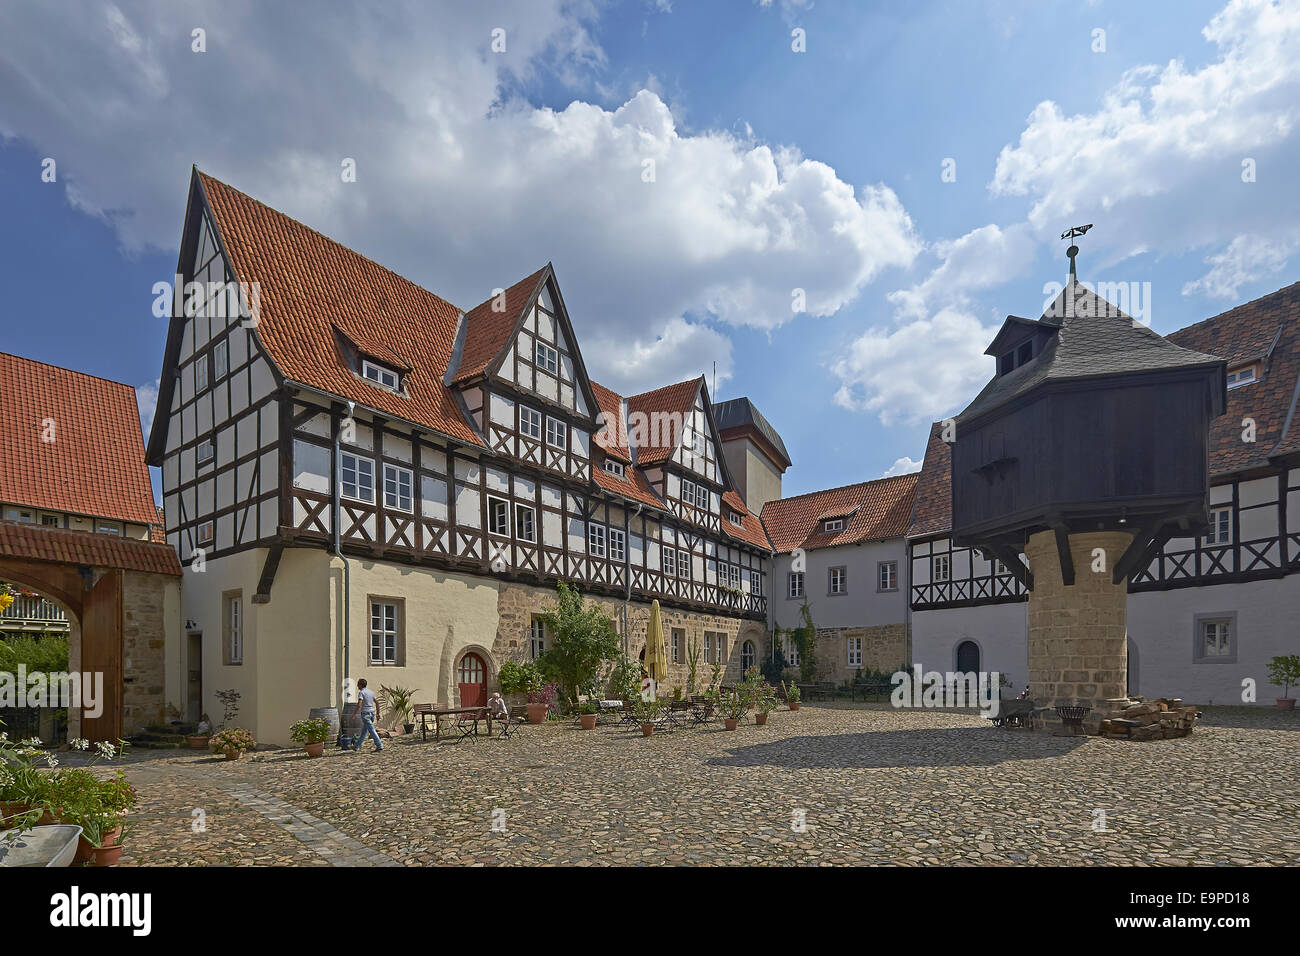 The Adelshof in Quedlinburg, Germany Stock Photo